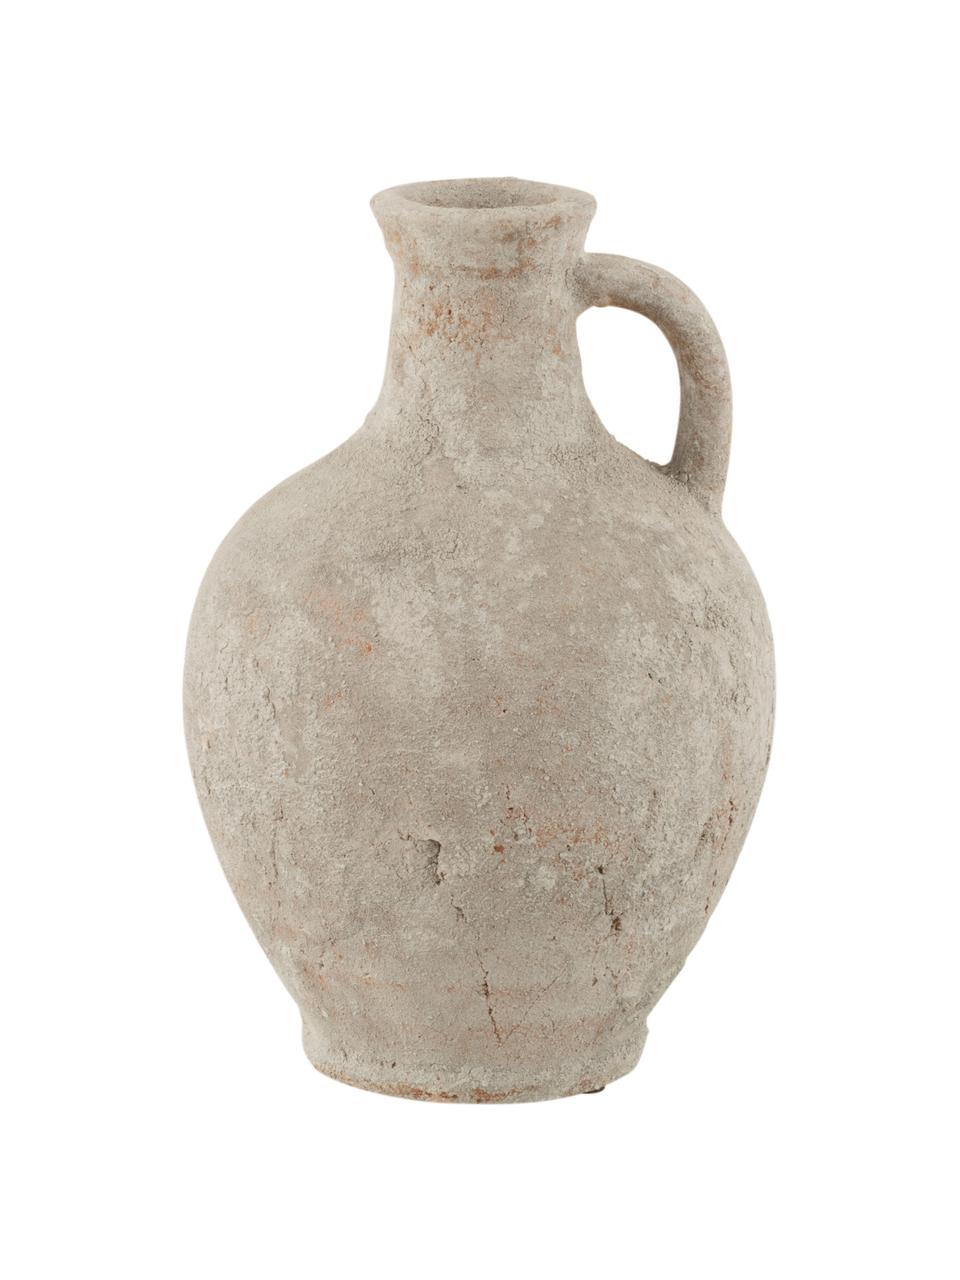 Deko-Vase Rustic in Cremeweiss, Keramik, Cremeweiss, Ø 21 x H 30 cm